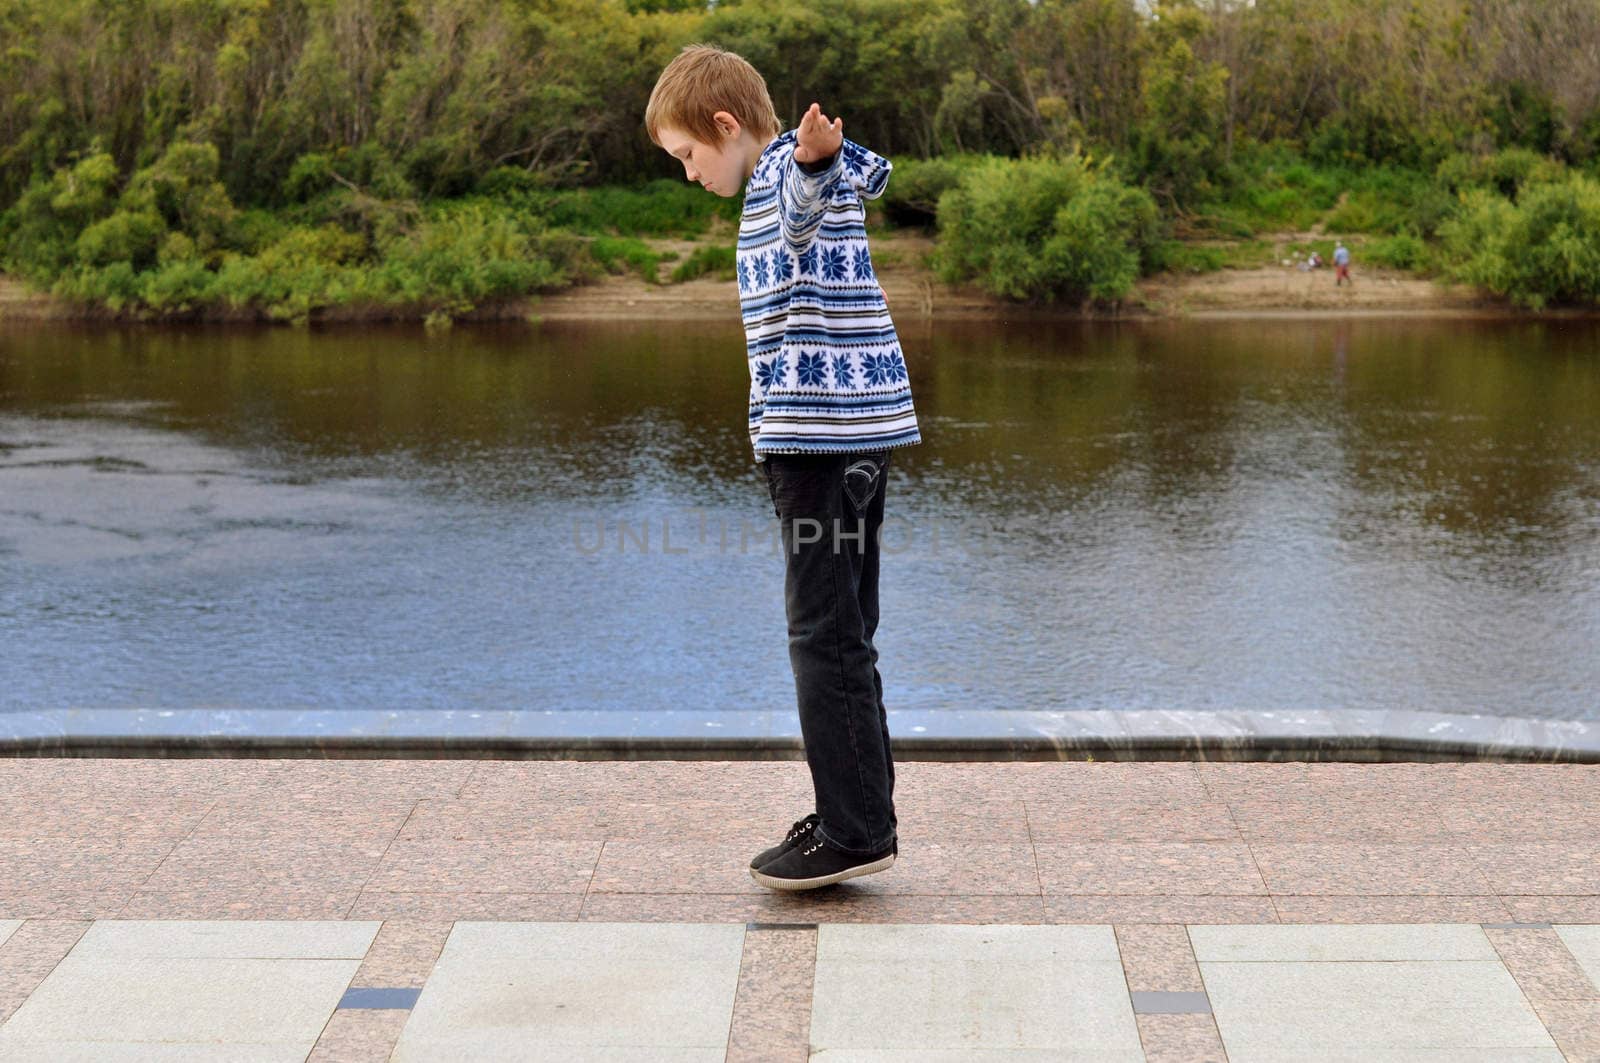 The teenage boy shows focus a levitation.